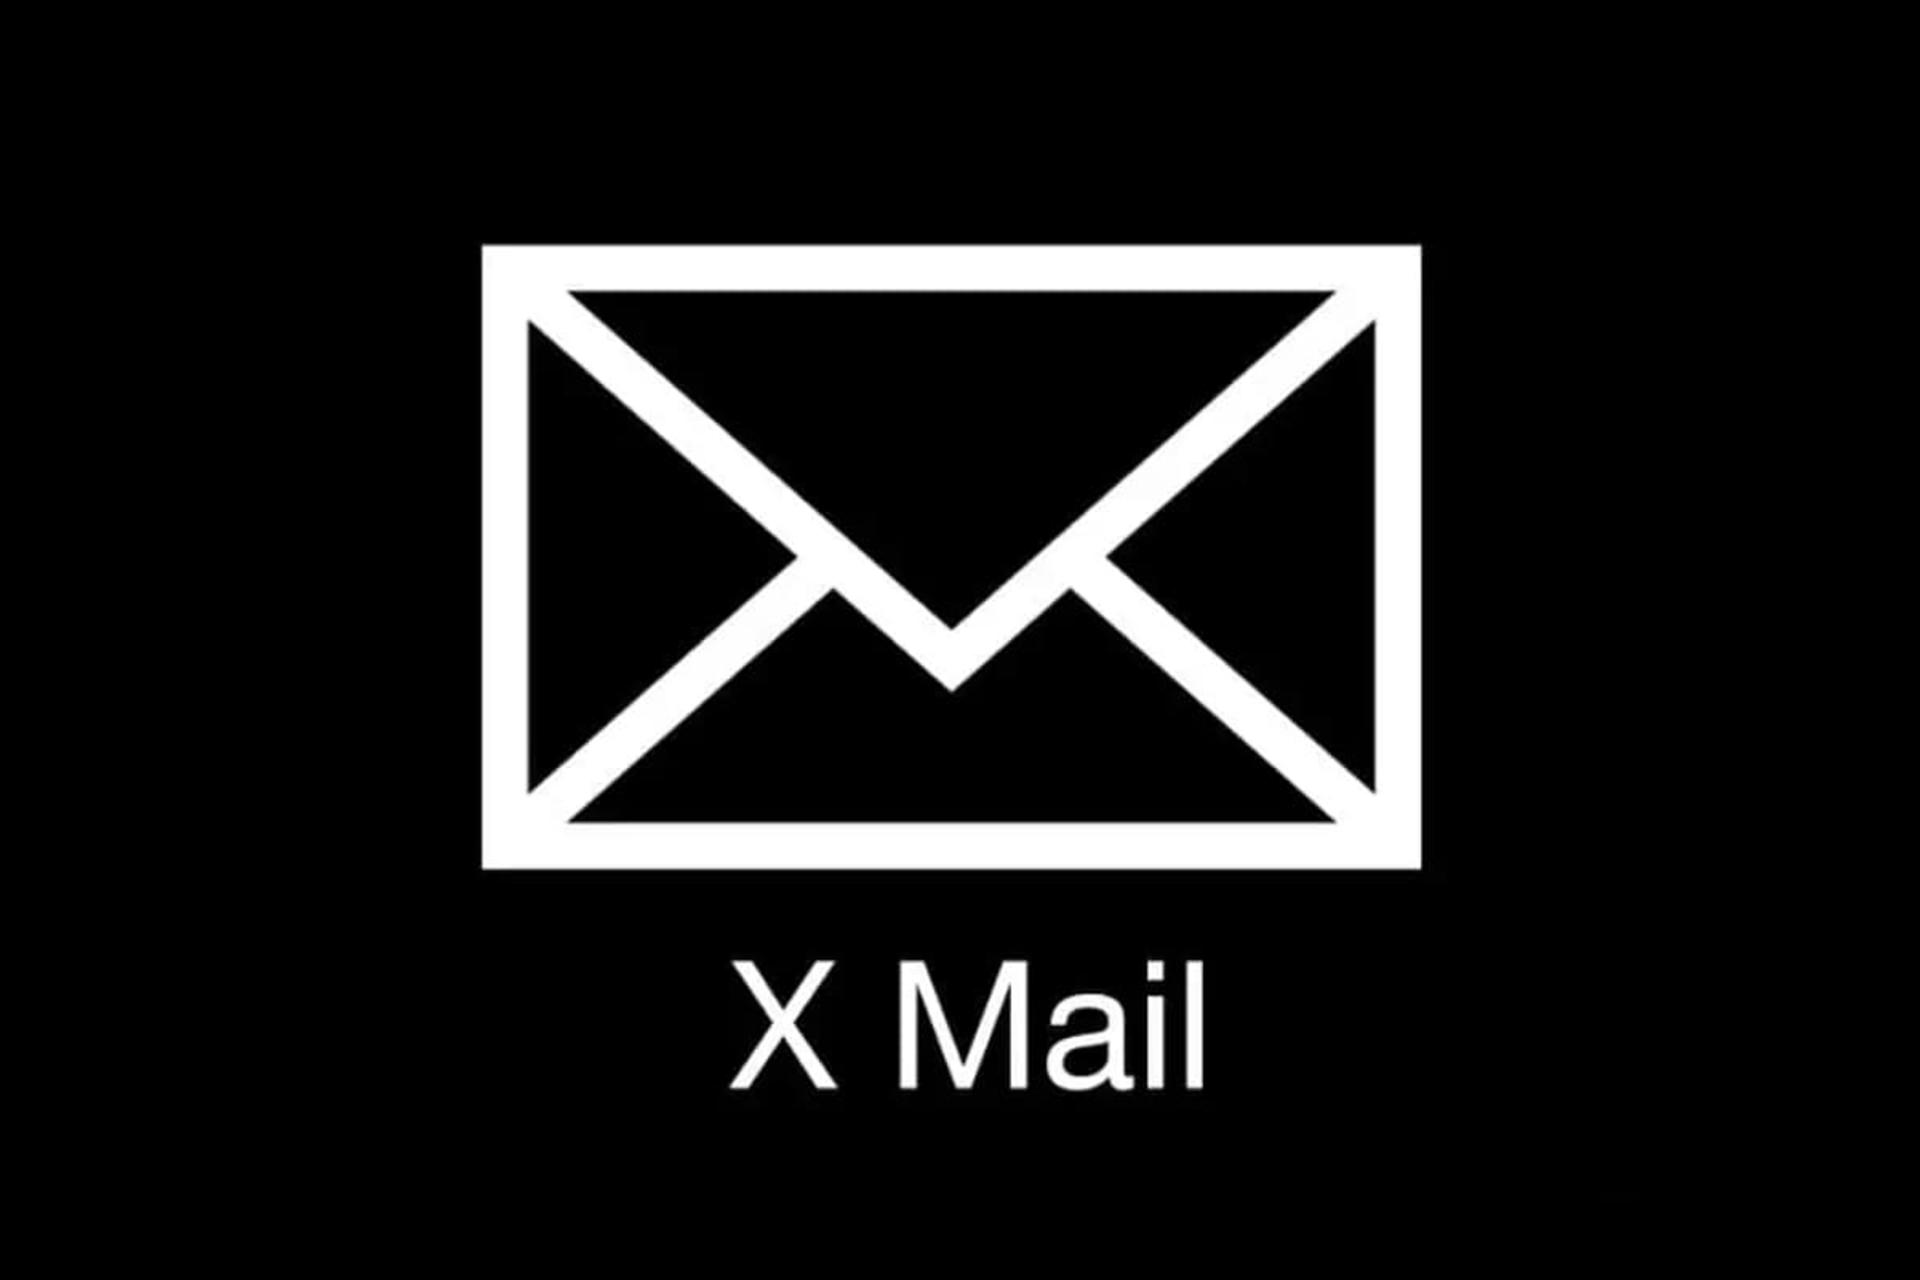 لوگو غیررسمی ایکس میل / XMail در پس زمینه مشکی